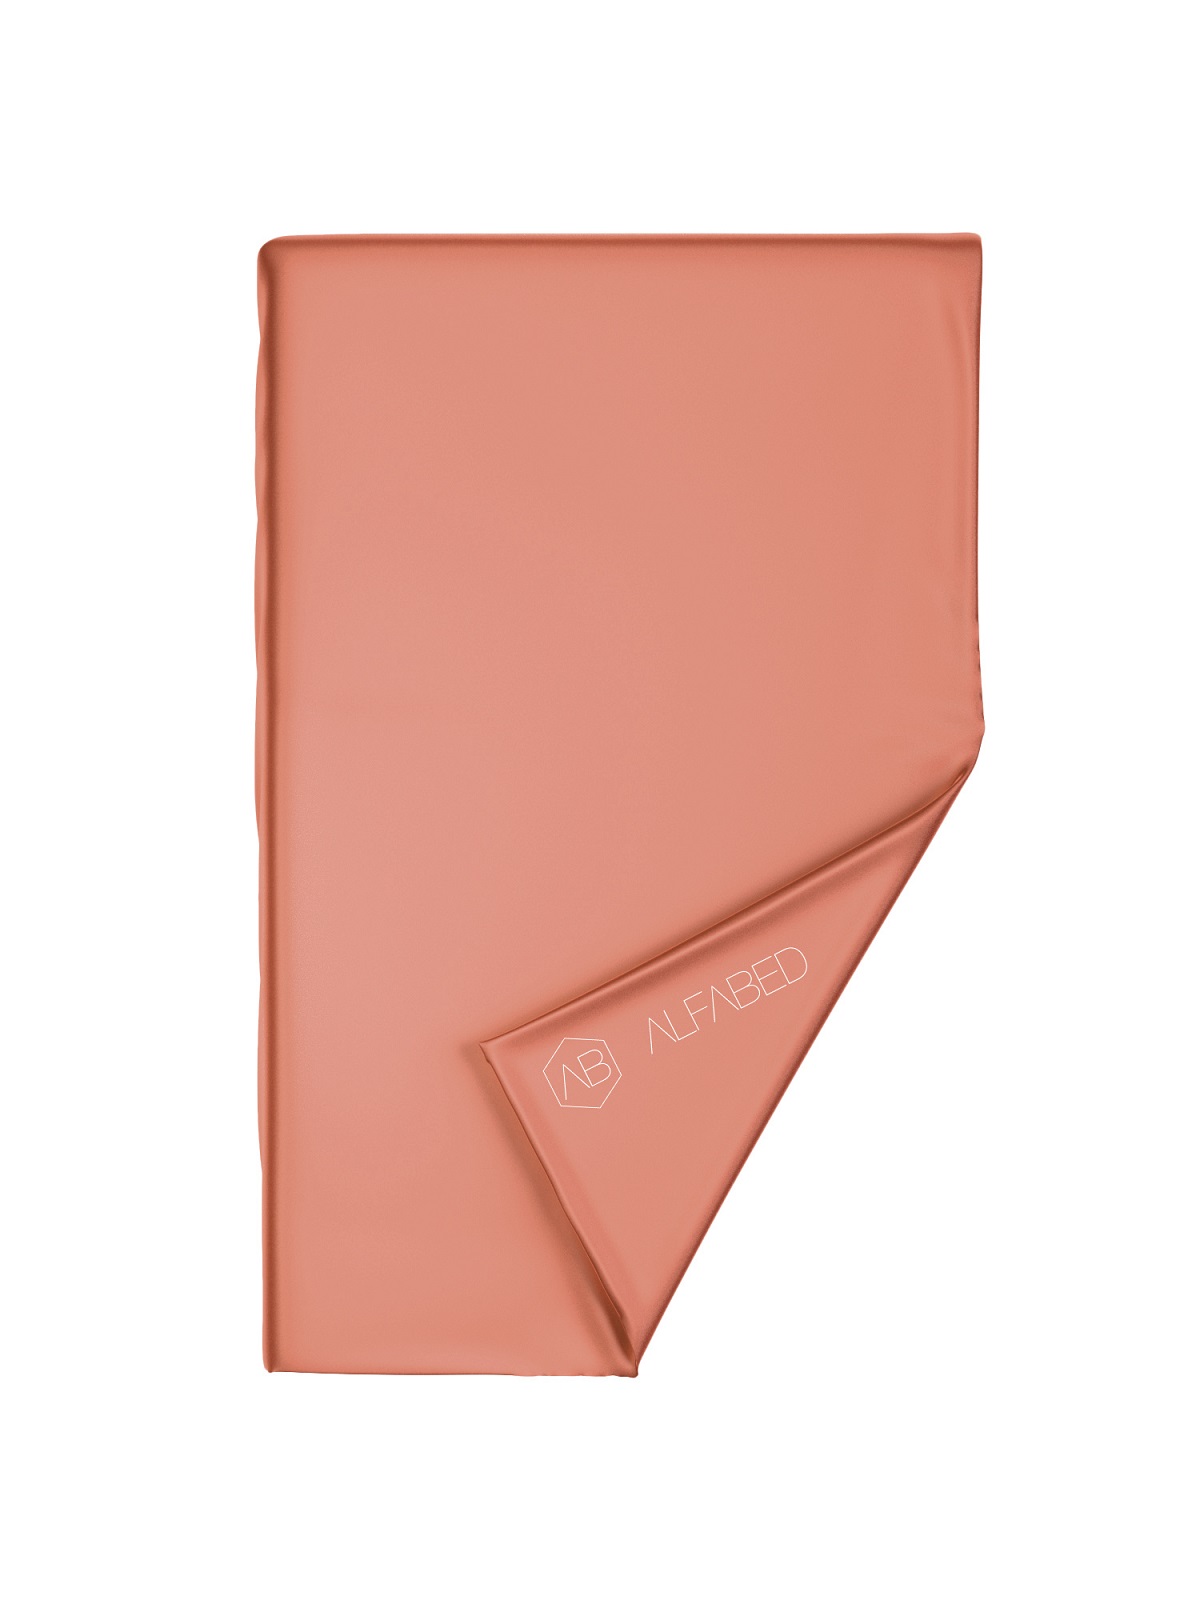 Topper Sheet-Case Royal Cotton Sateen Pink H-151